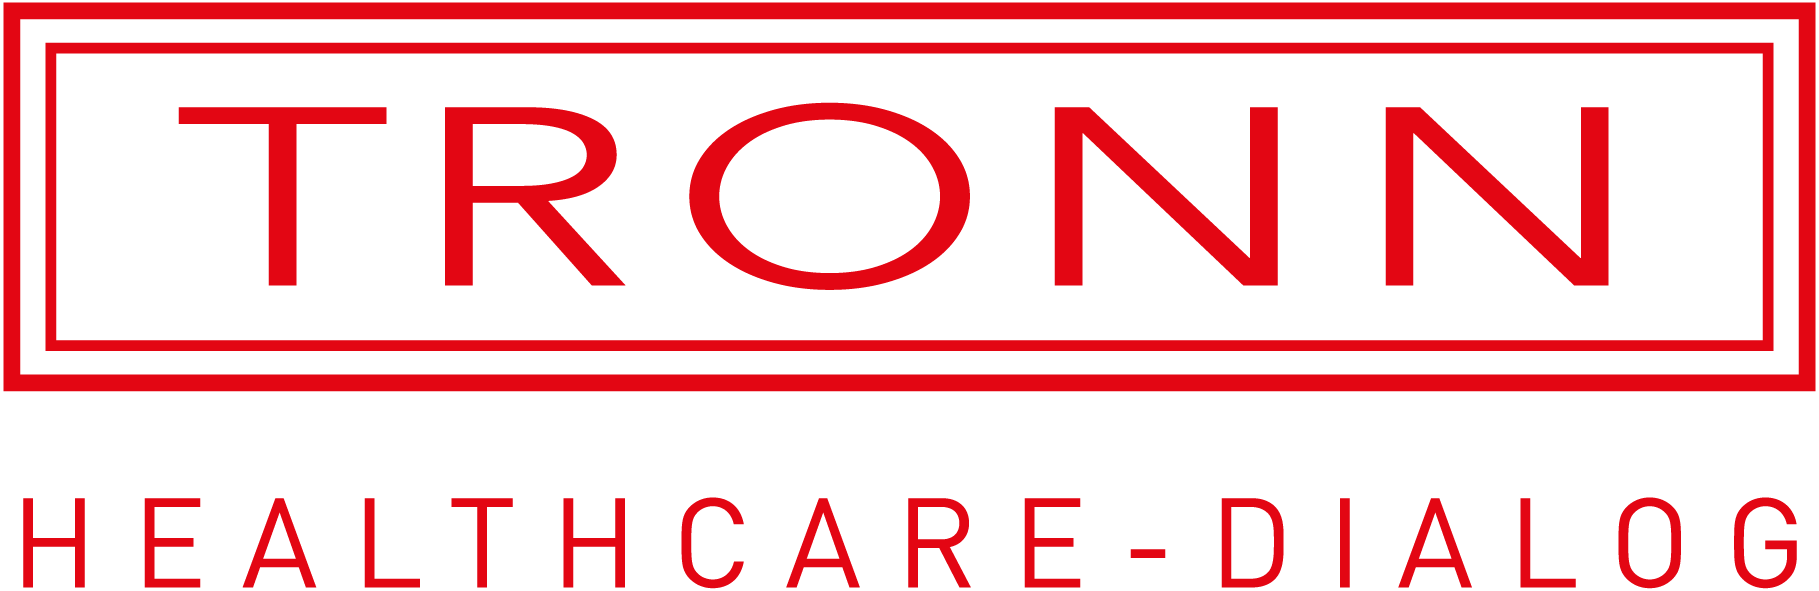 tronn healthcare logo red